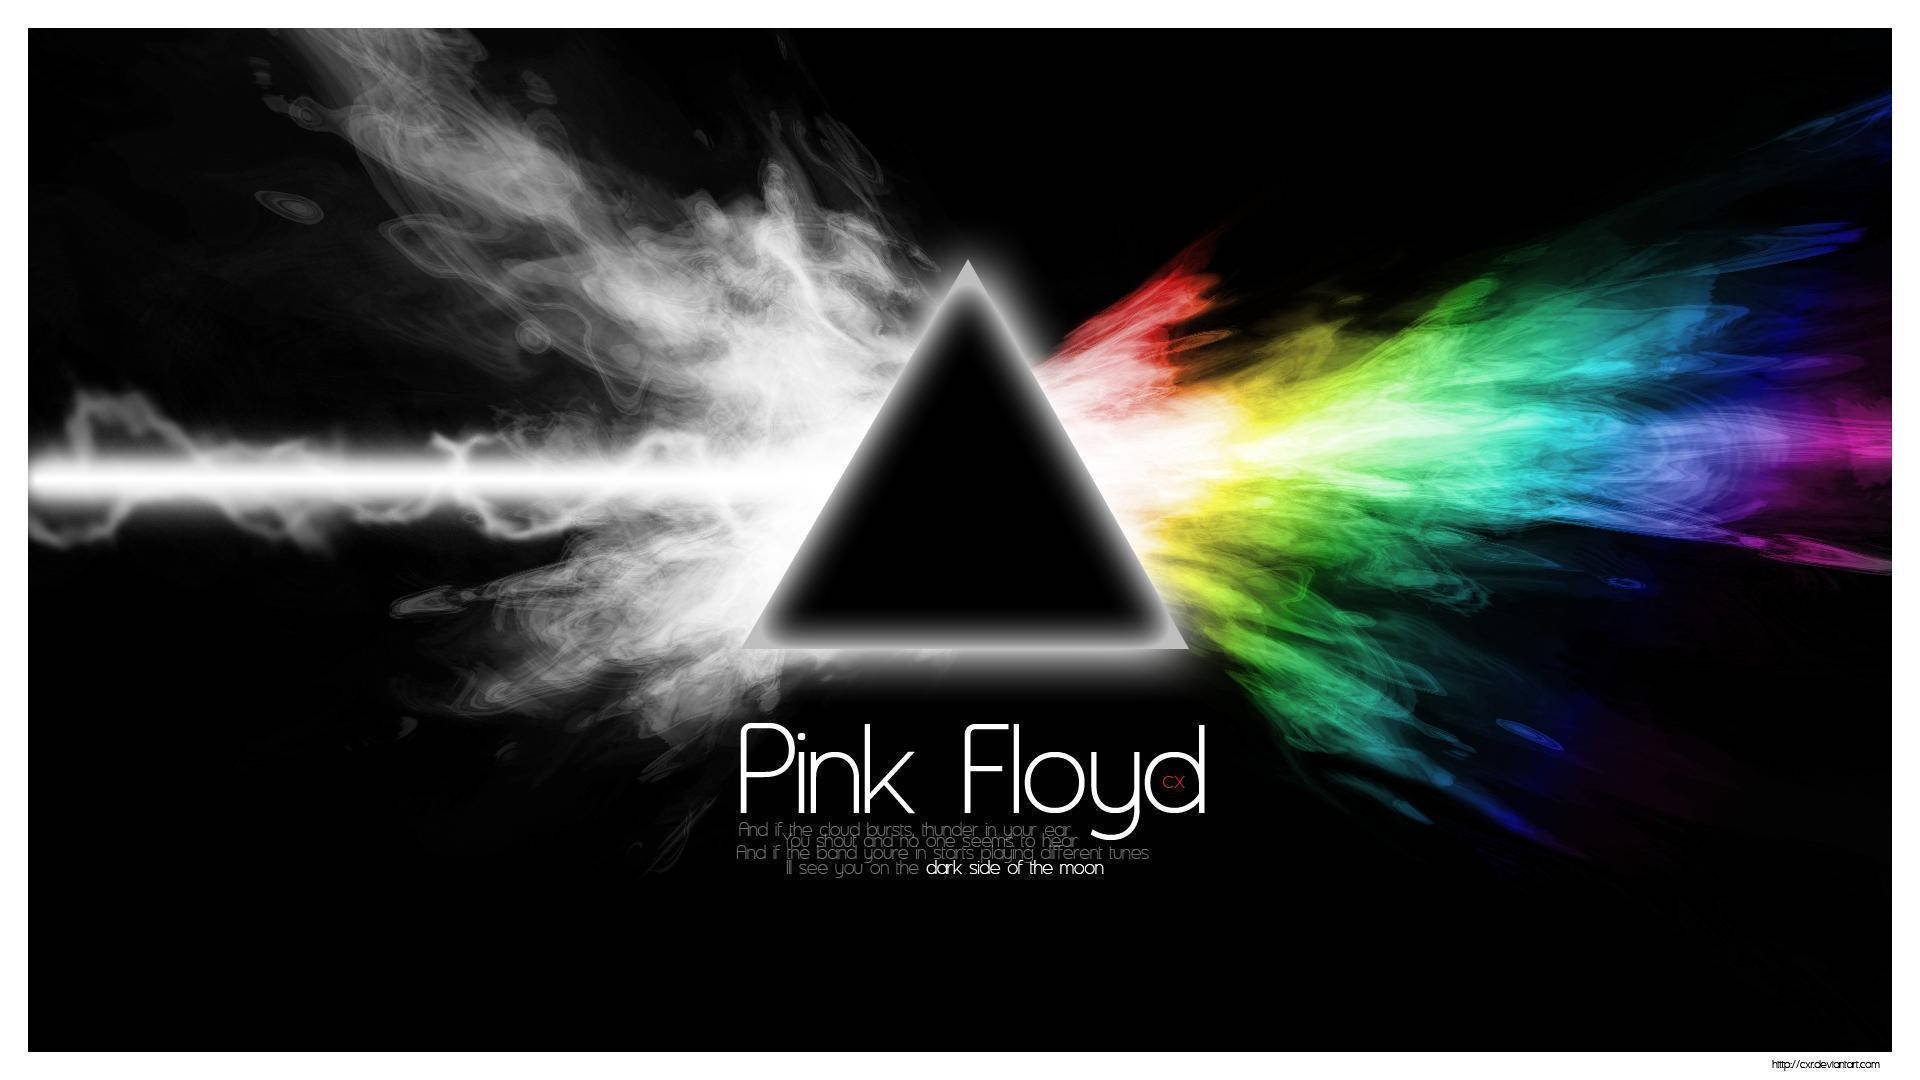 Pink Floyd Digital Album Cover